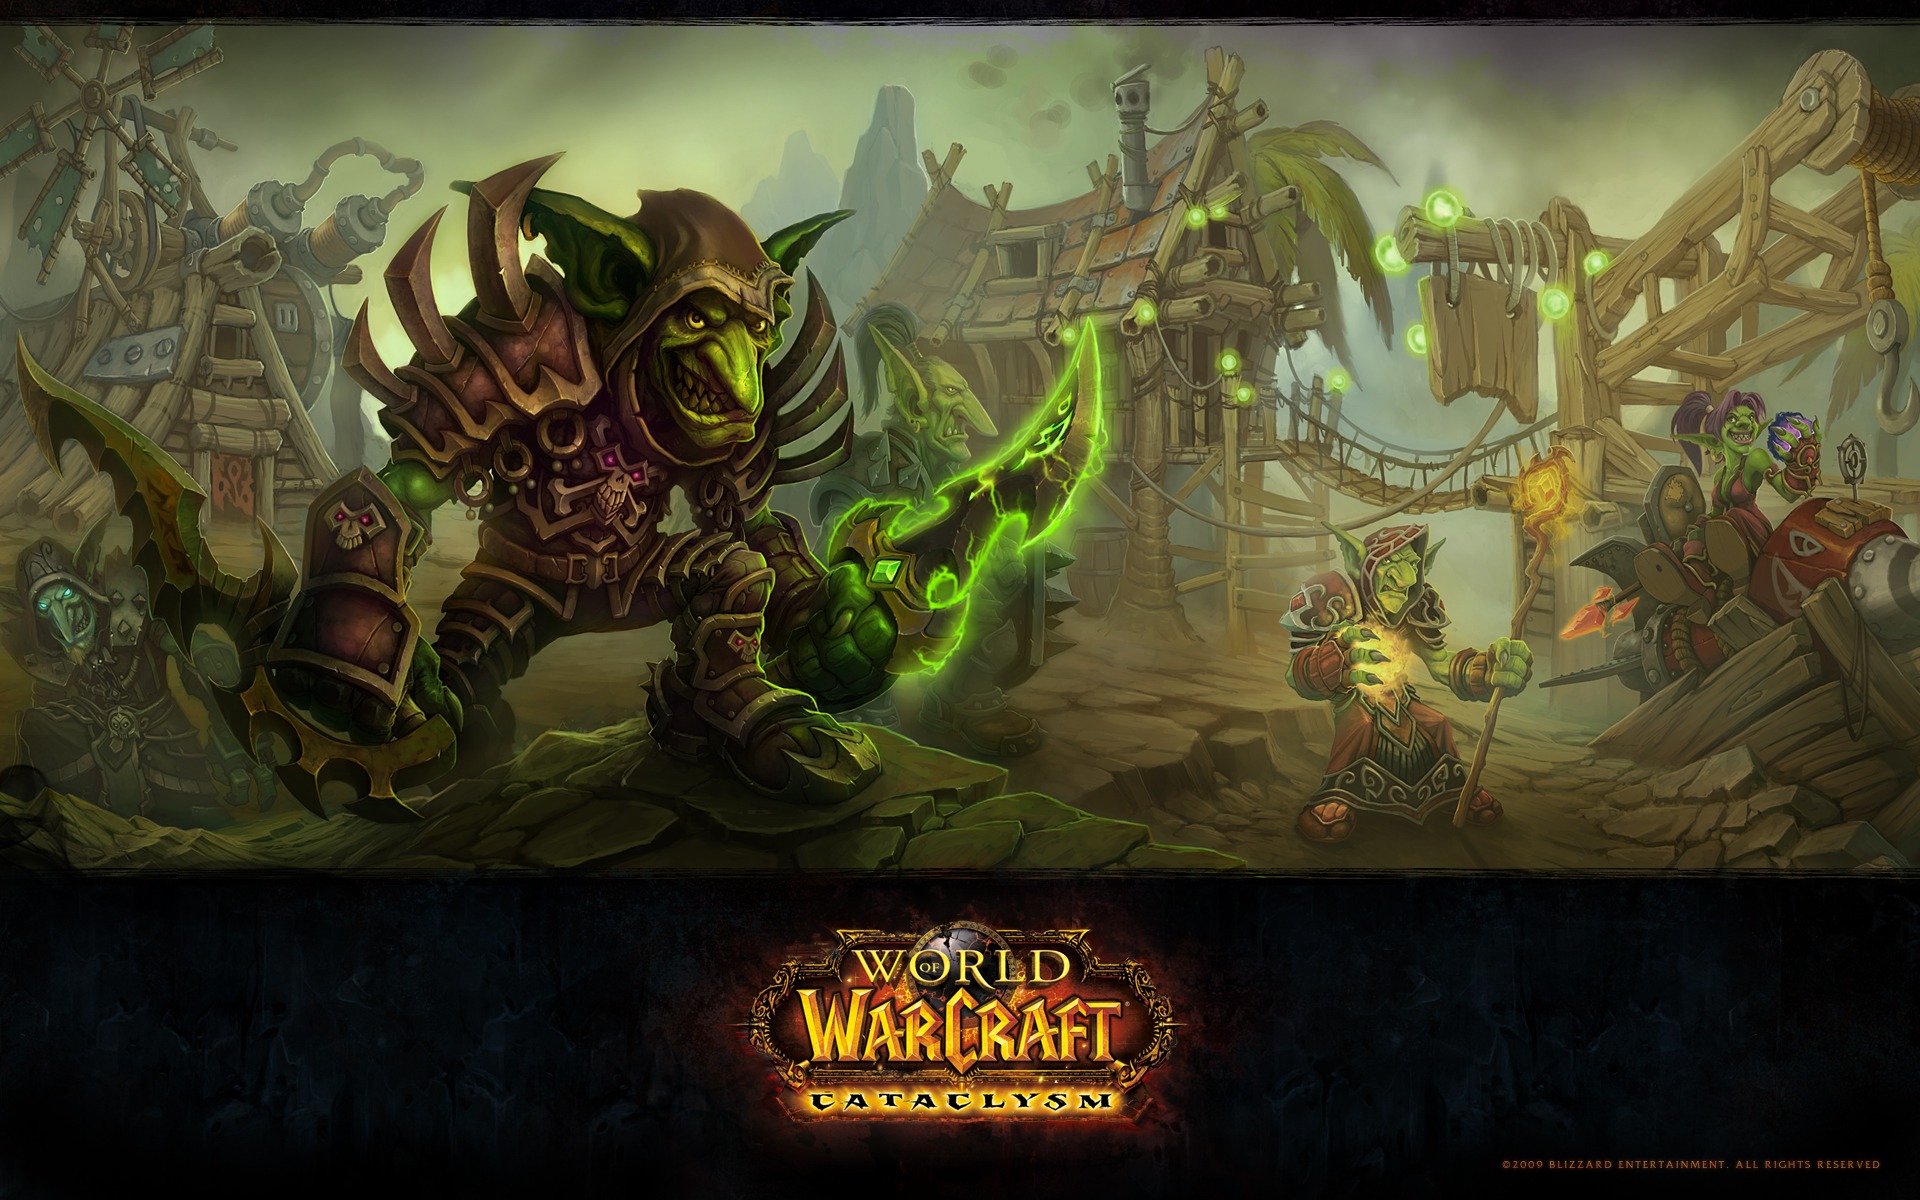 World of Warcraft 魔兽世界高清壁纸(二)9 - 1920x1200